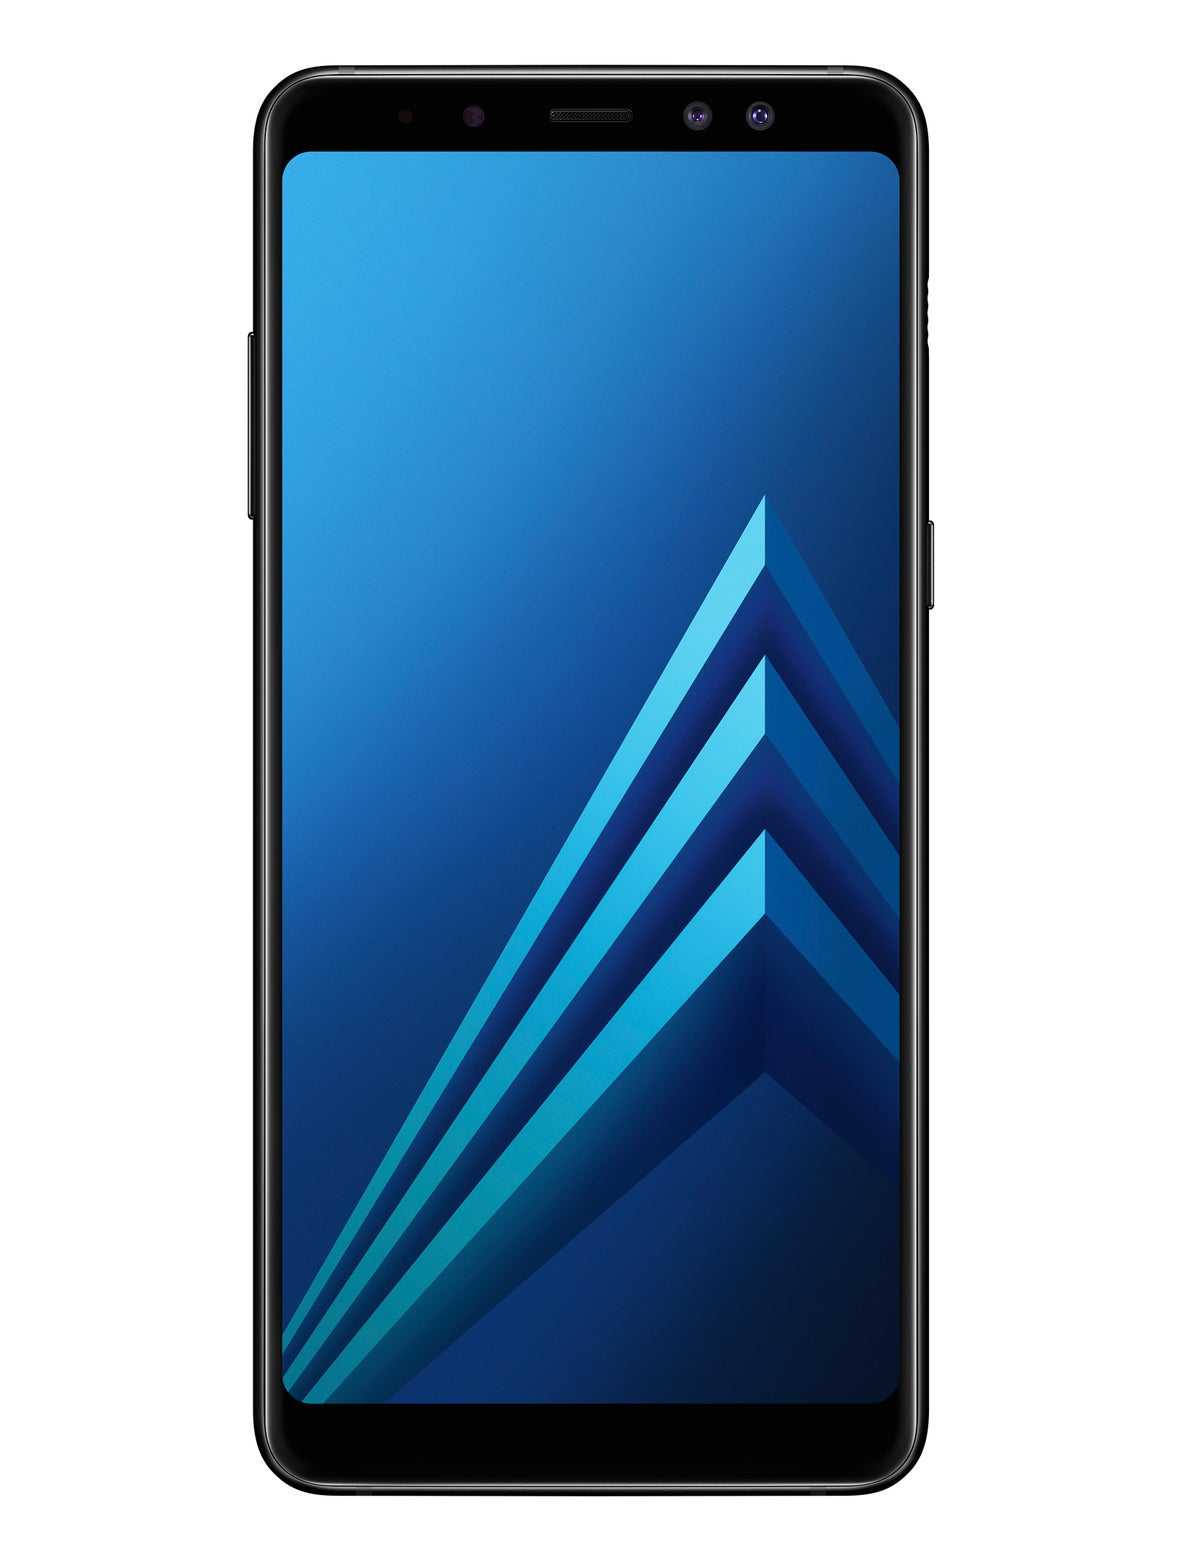 Samsung Galaxy A8+ (2018) specs - PhoneArena